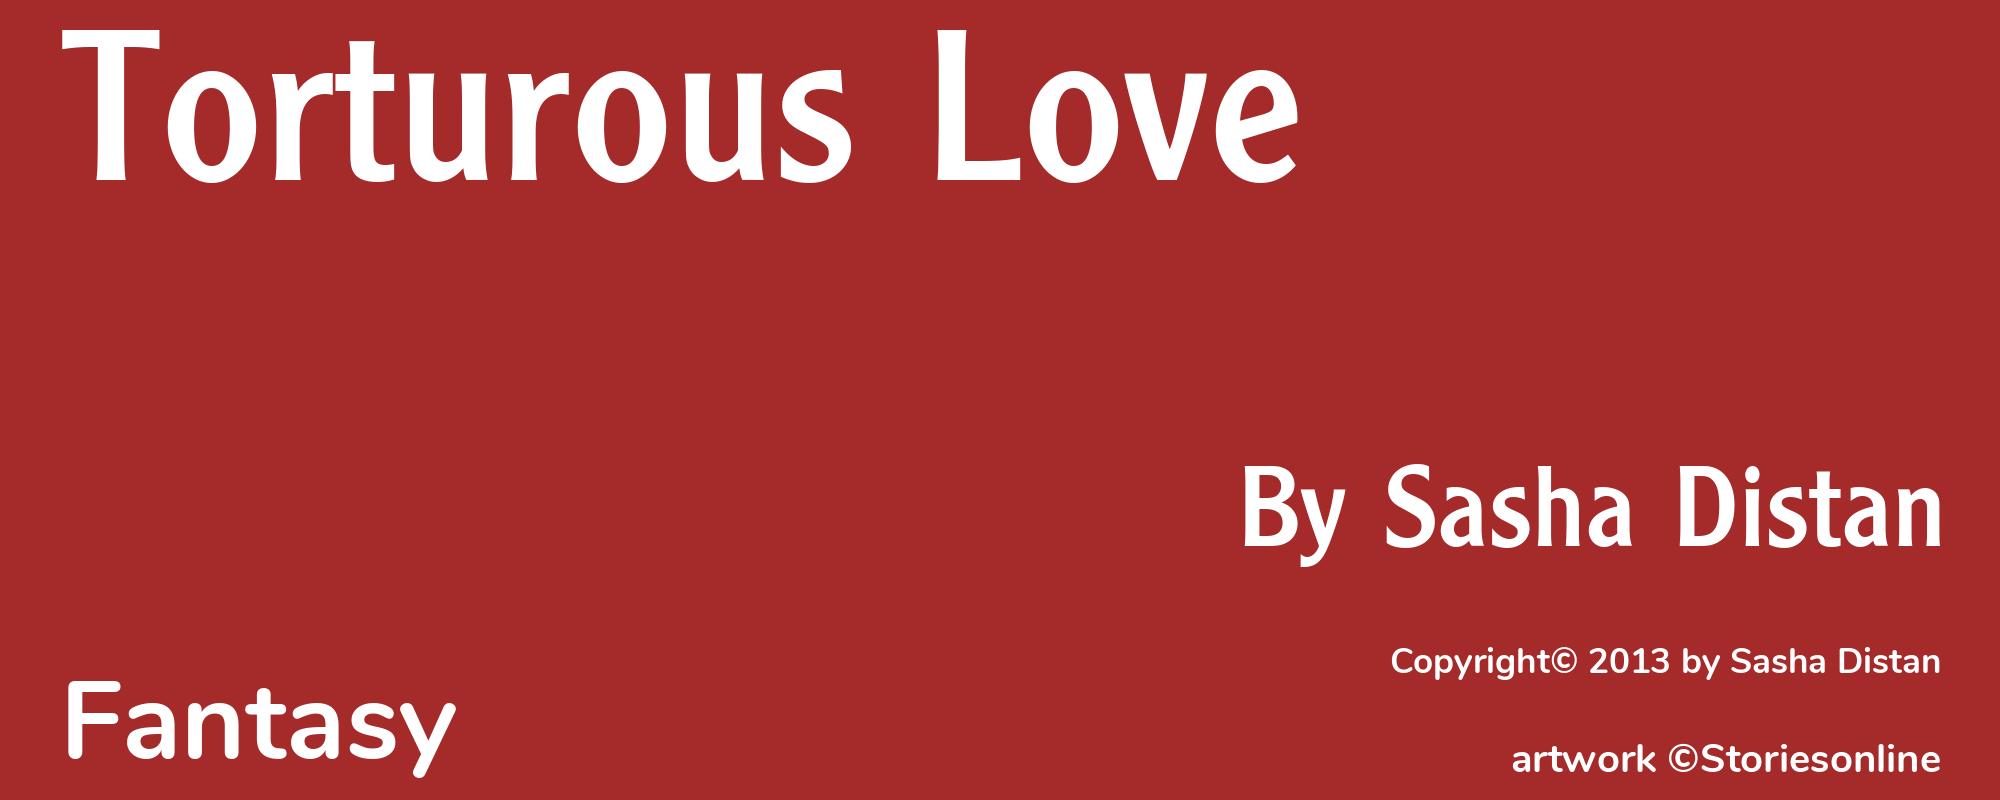 Torturous Love - Cover